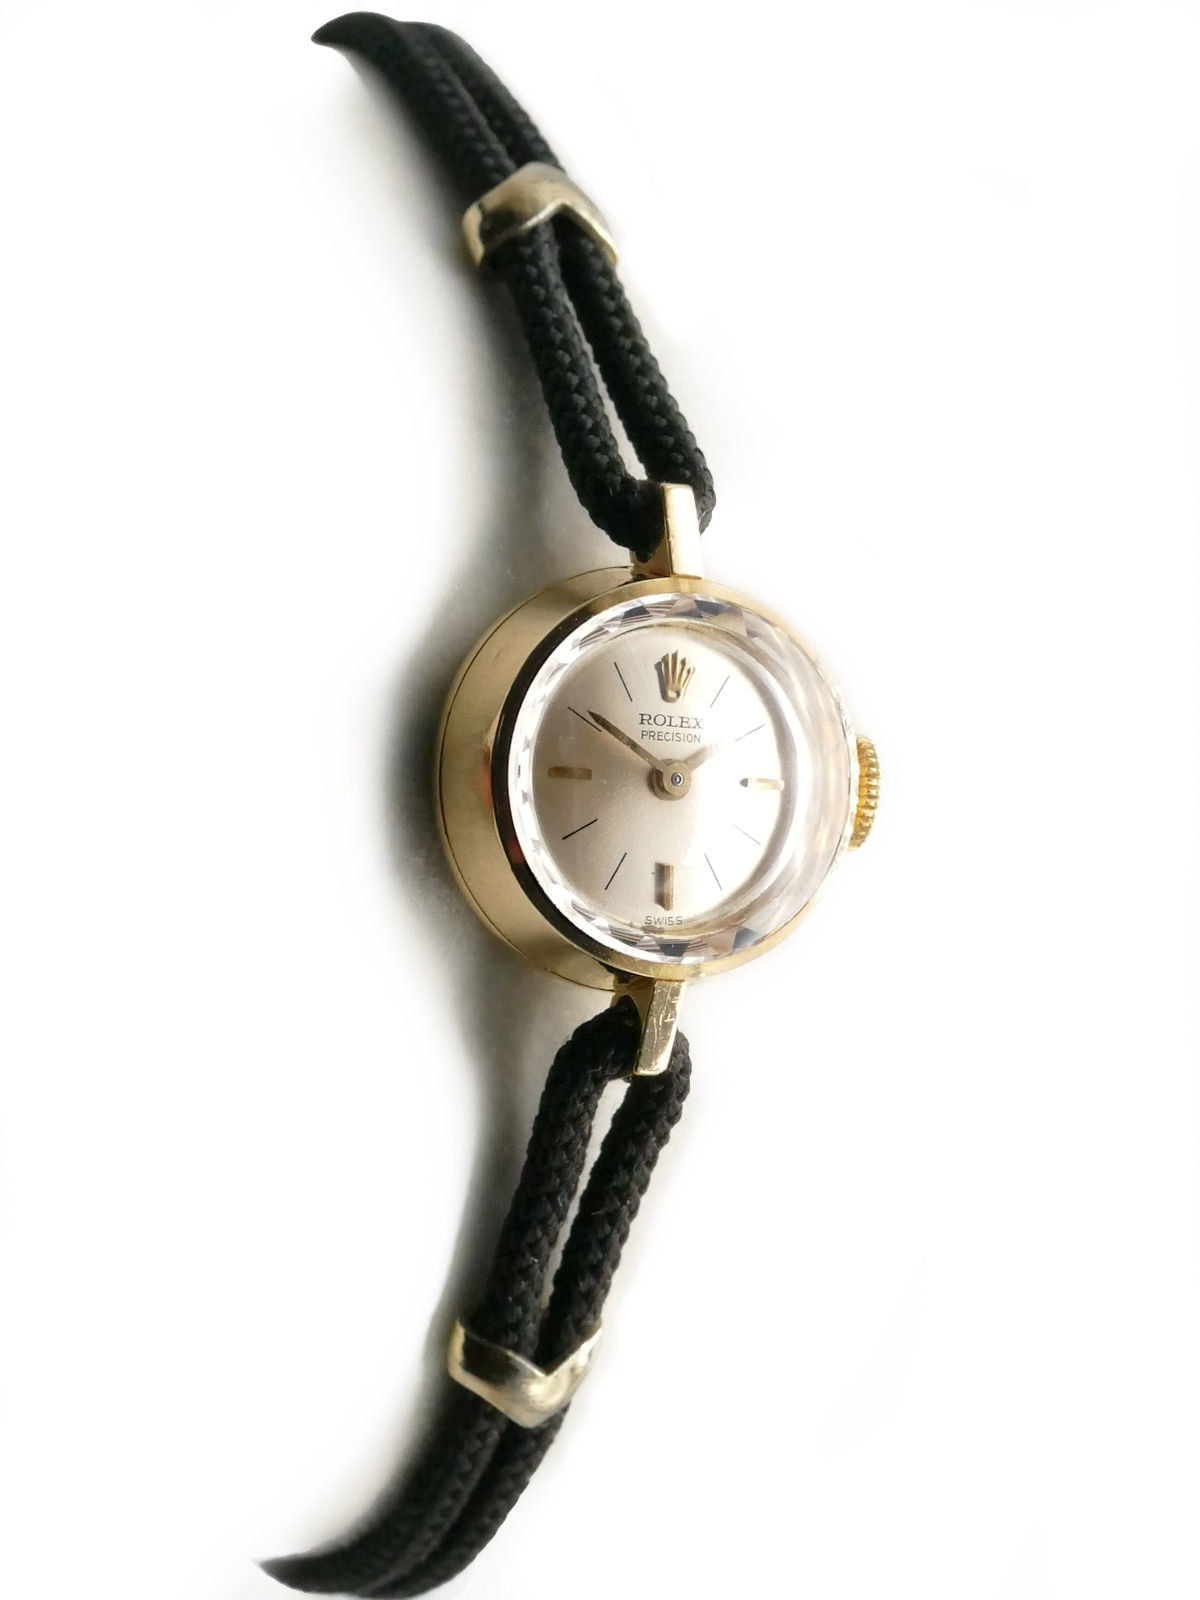 Vintage Rolex Ladies Dress Watch | vlr.eng.br